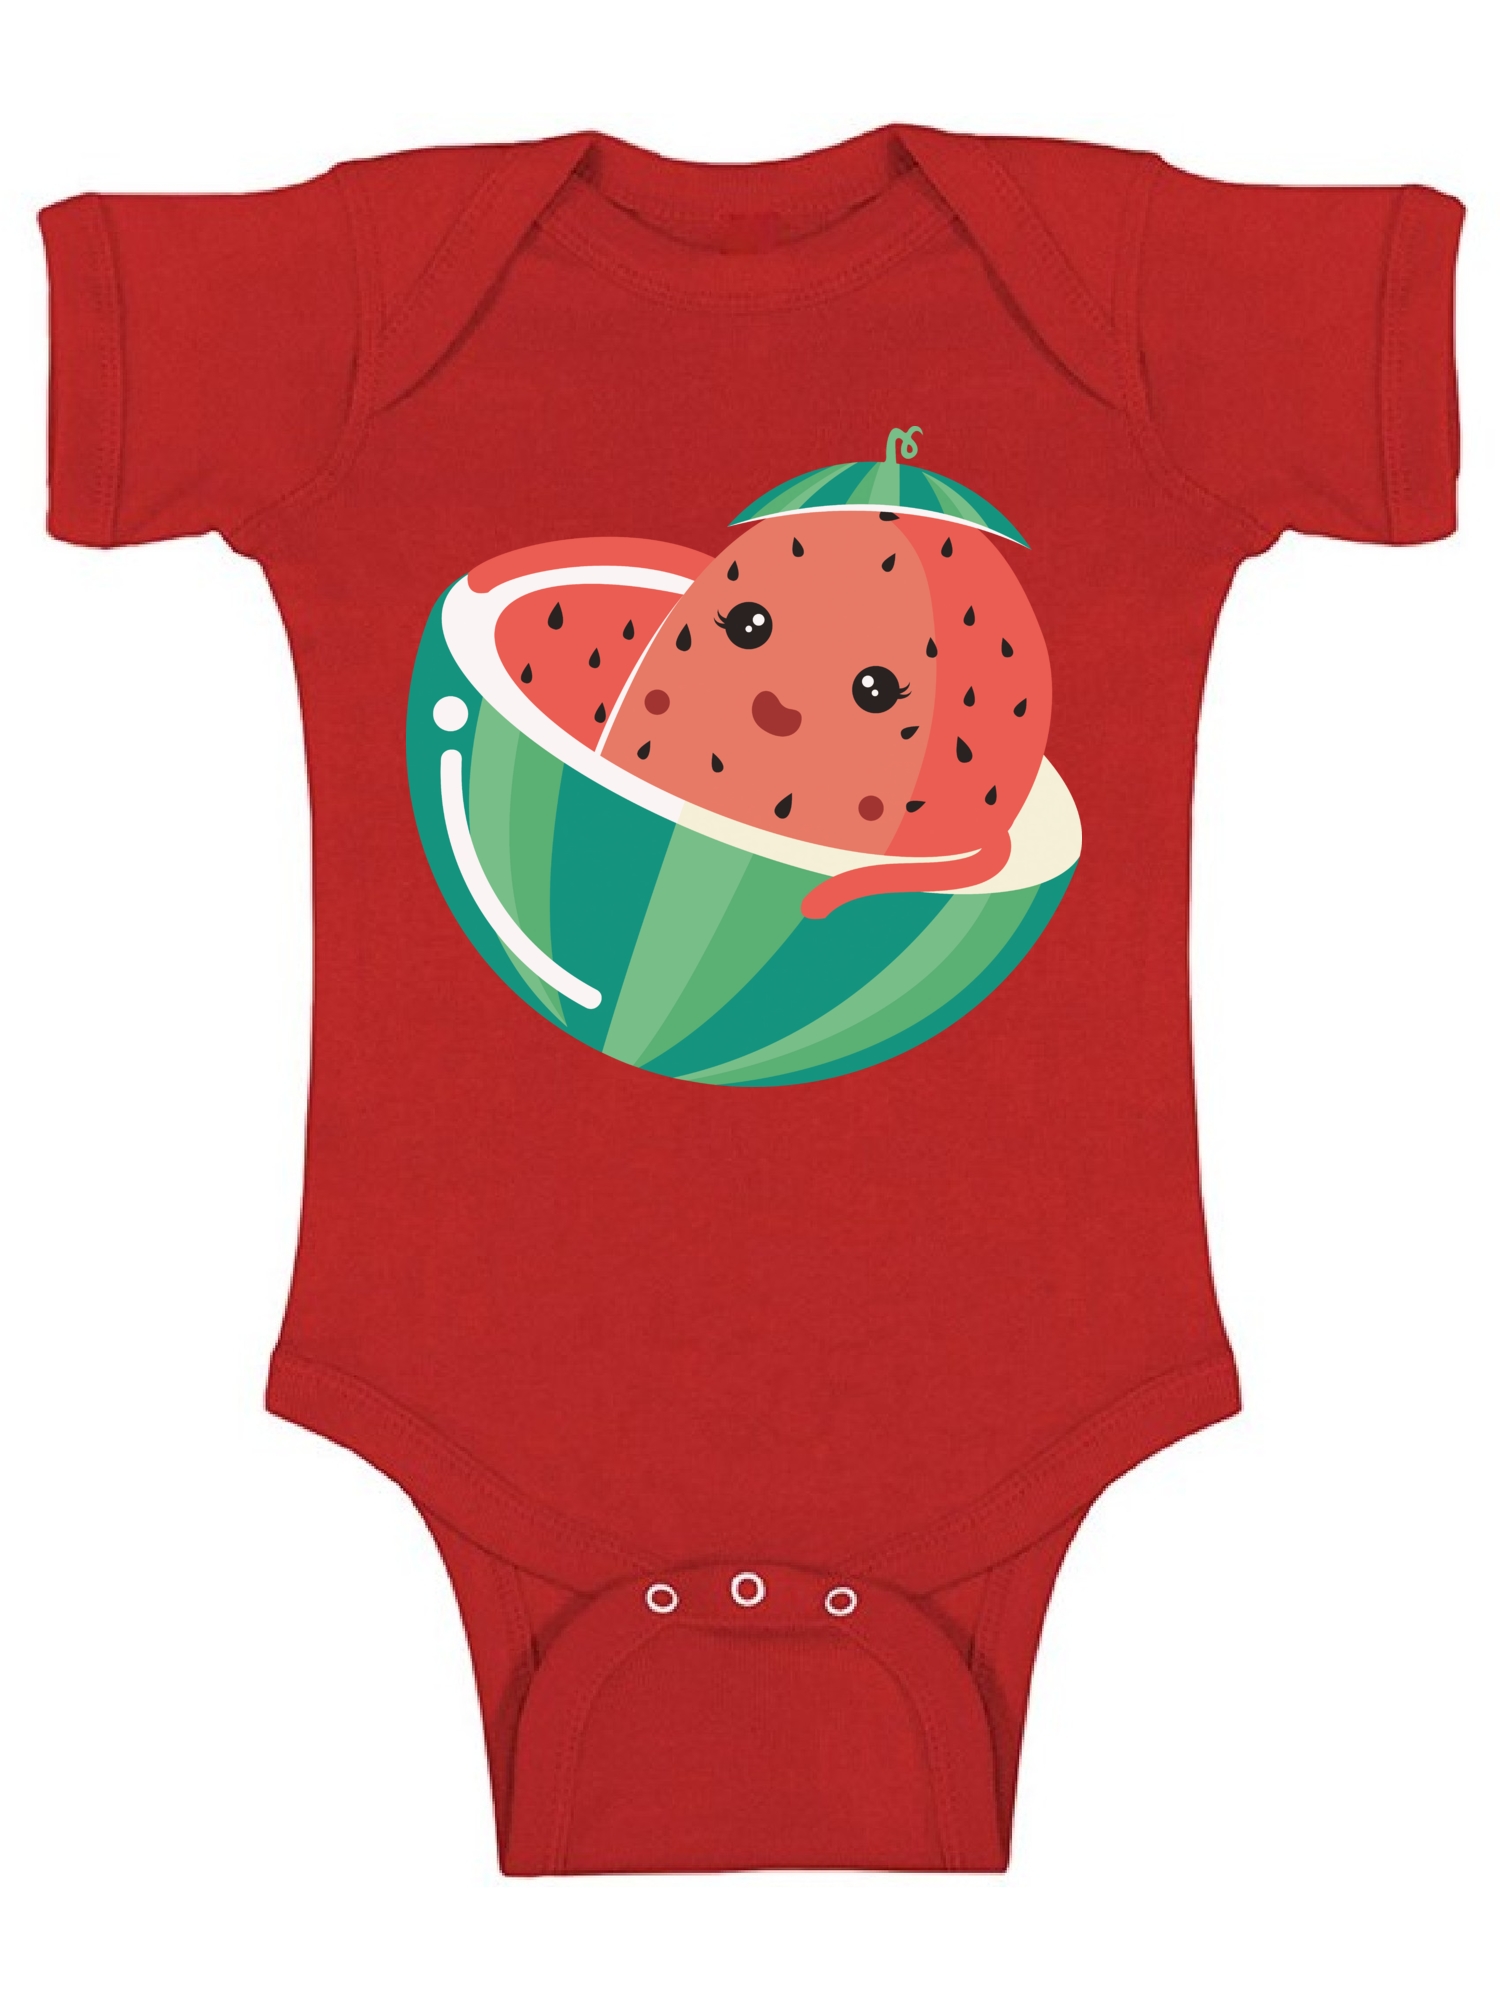 Watermelon Baby Romper